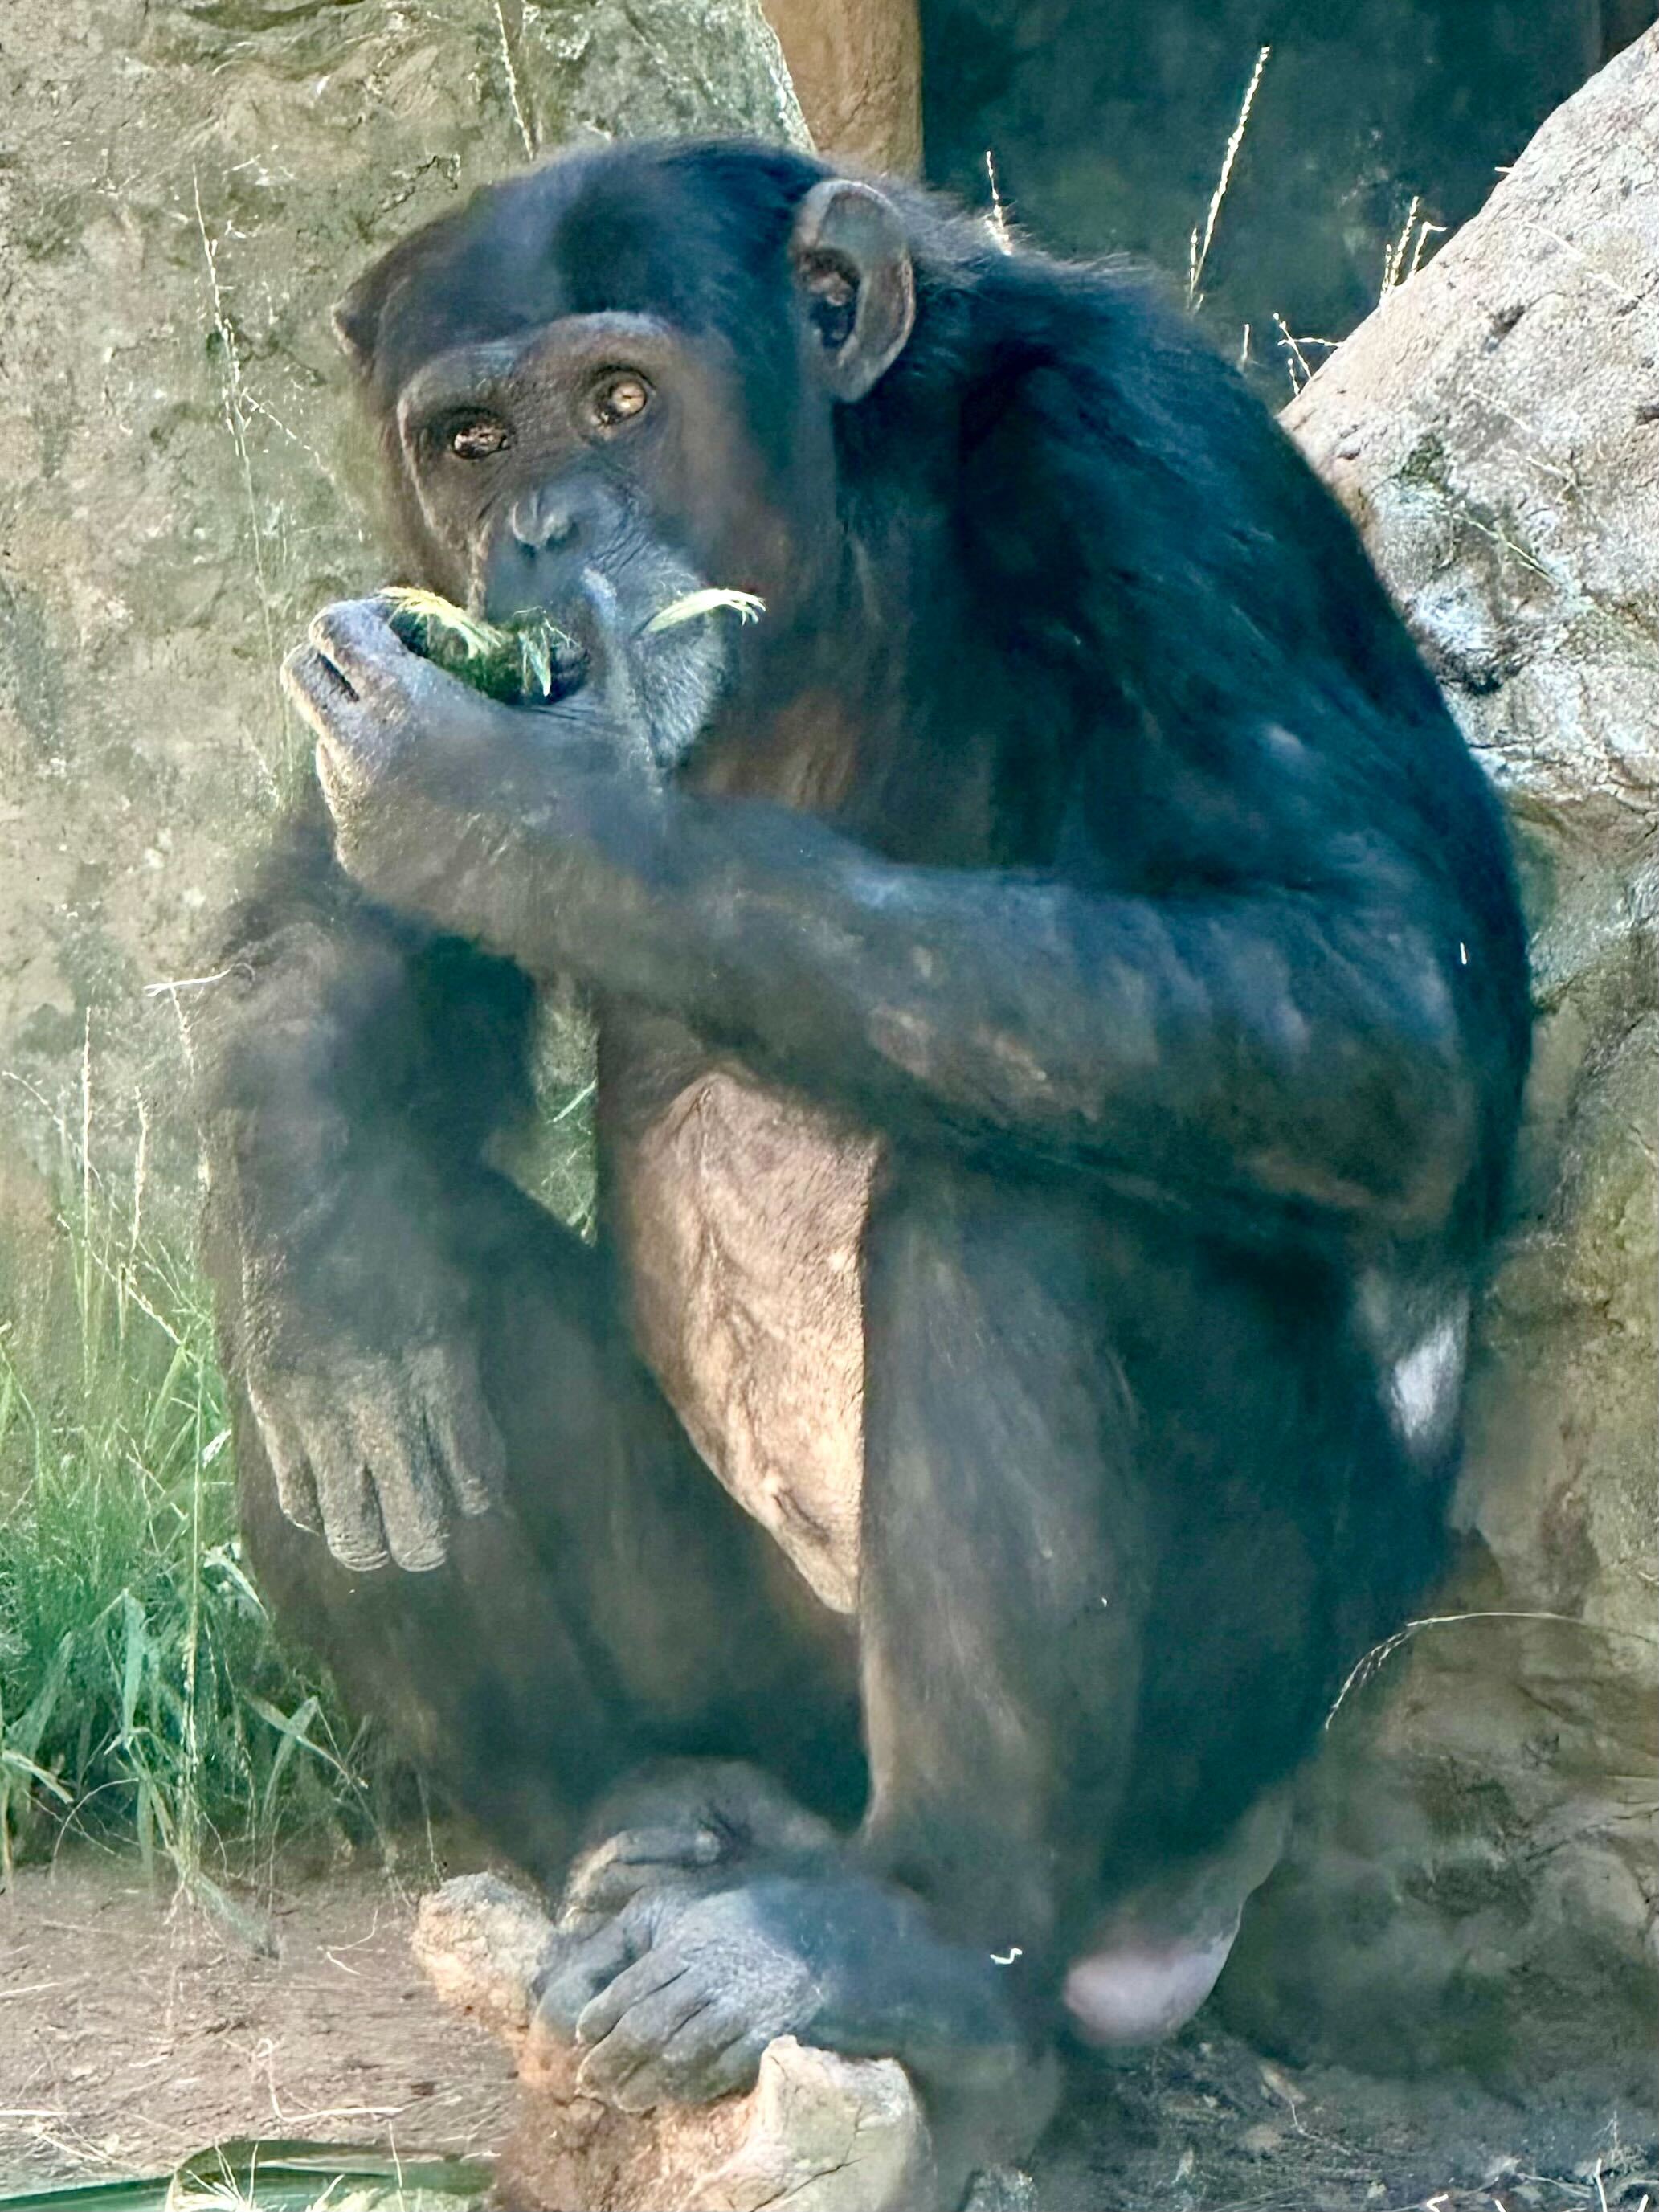 Maria the chimp in her enclosure